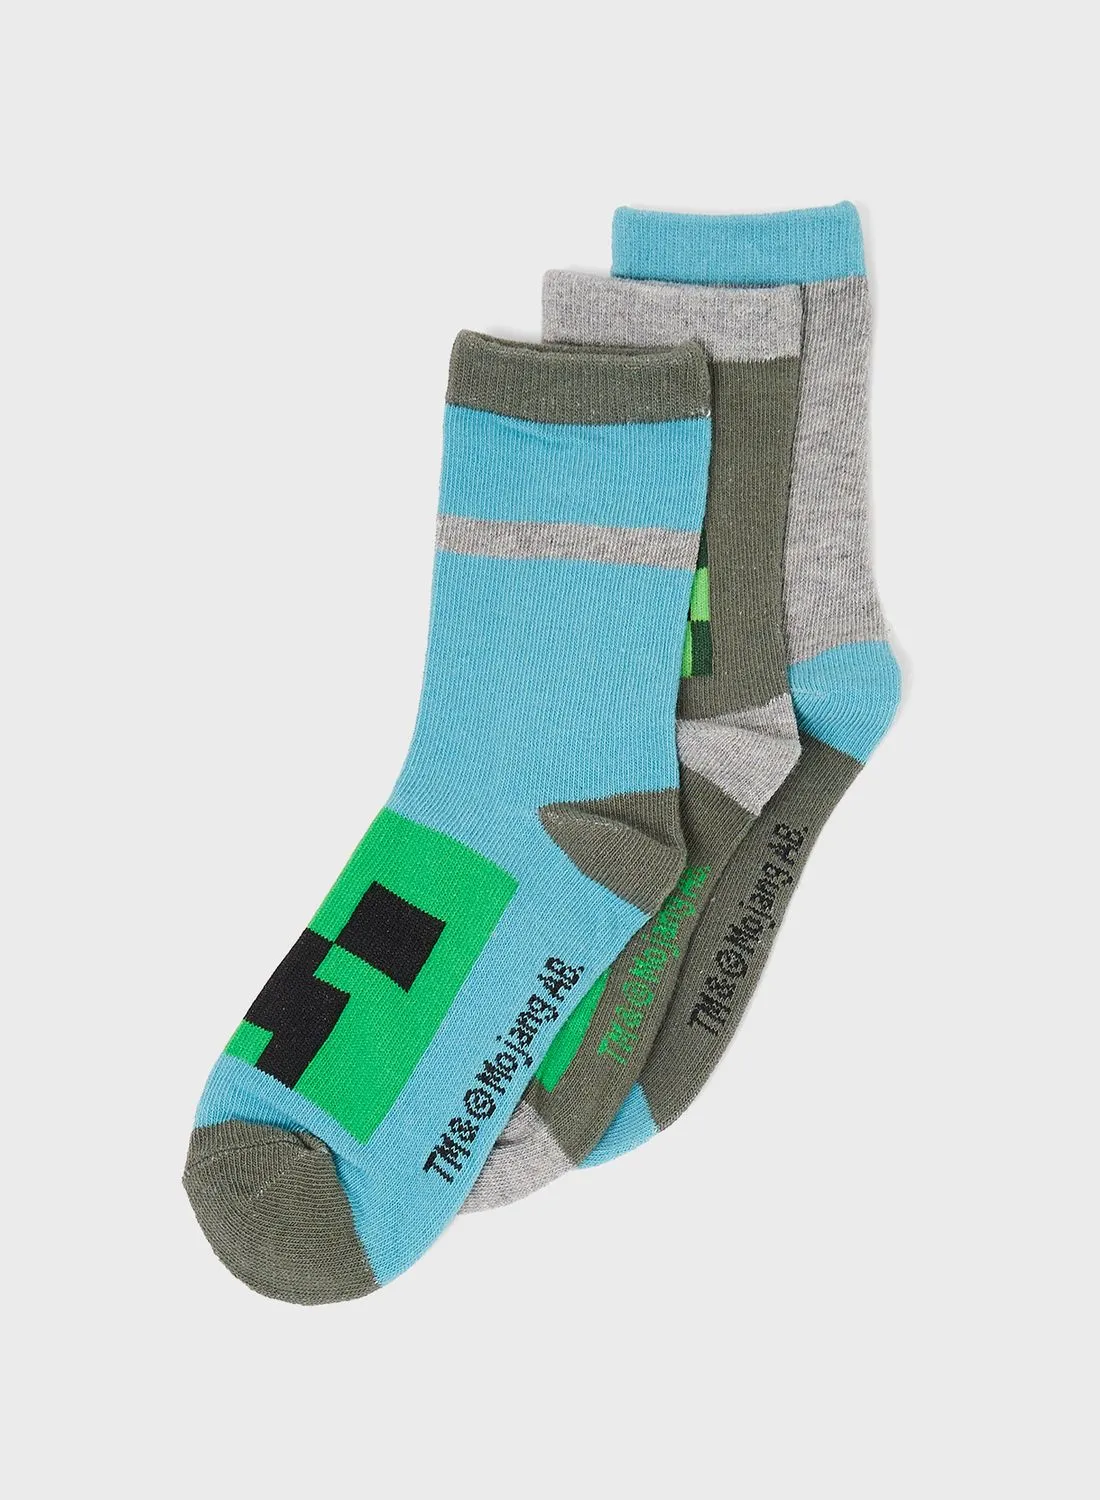 MINECRAFT Minecraft Pack Of 6 Printed Sockes